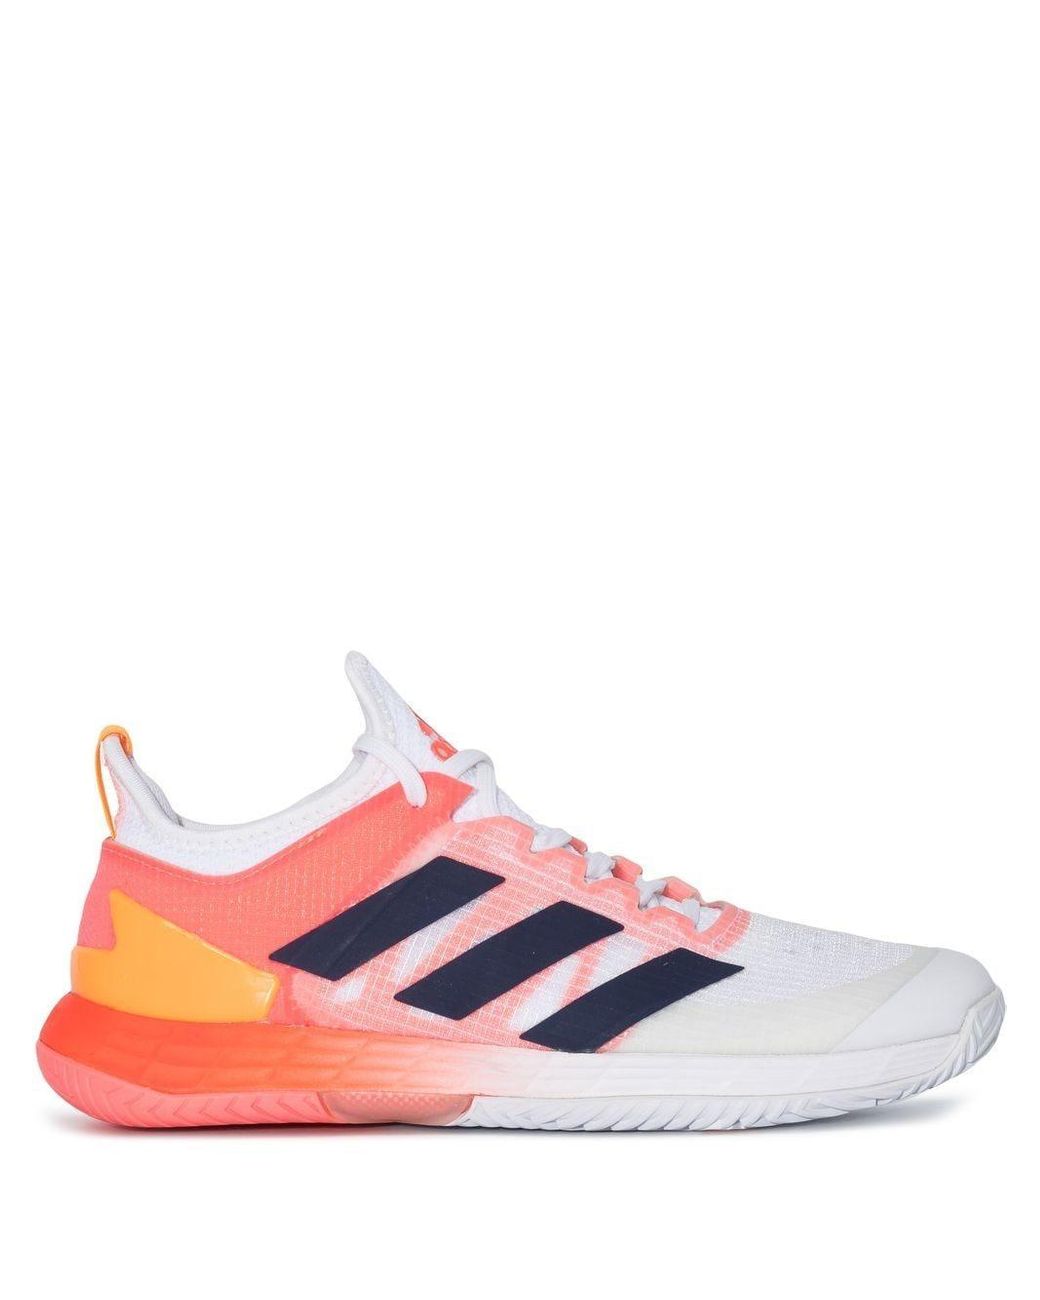 adidas Adizero Ubersonic 4 Tennis Sneakers in Pink | Lyst